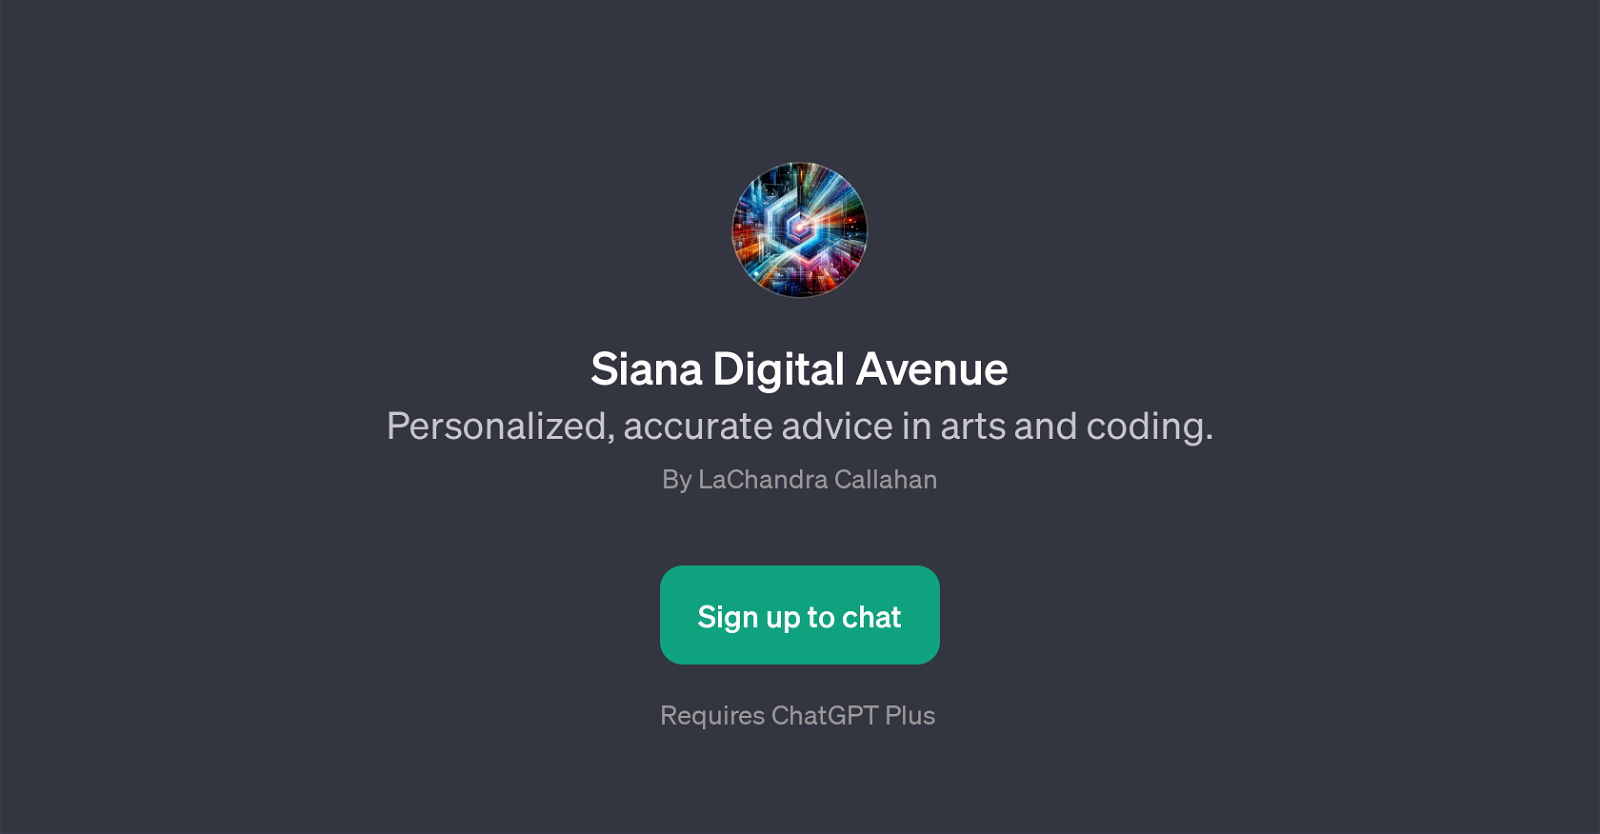 Siana Digital Avenue website